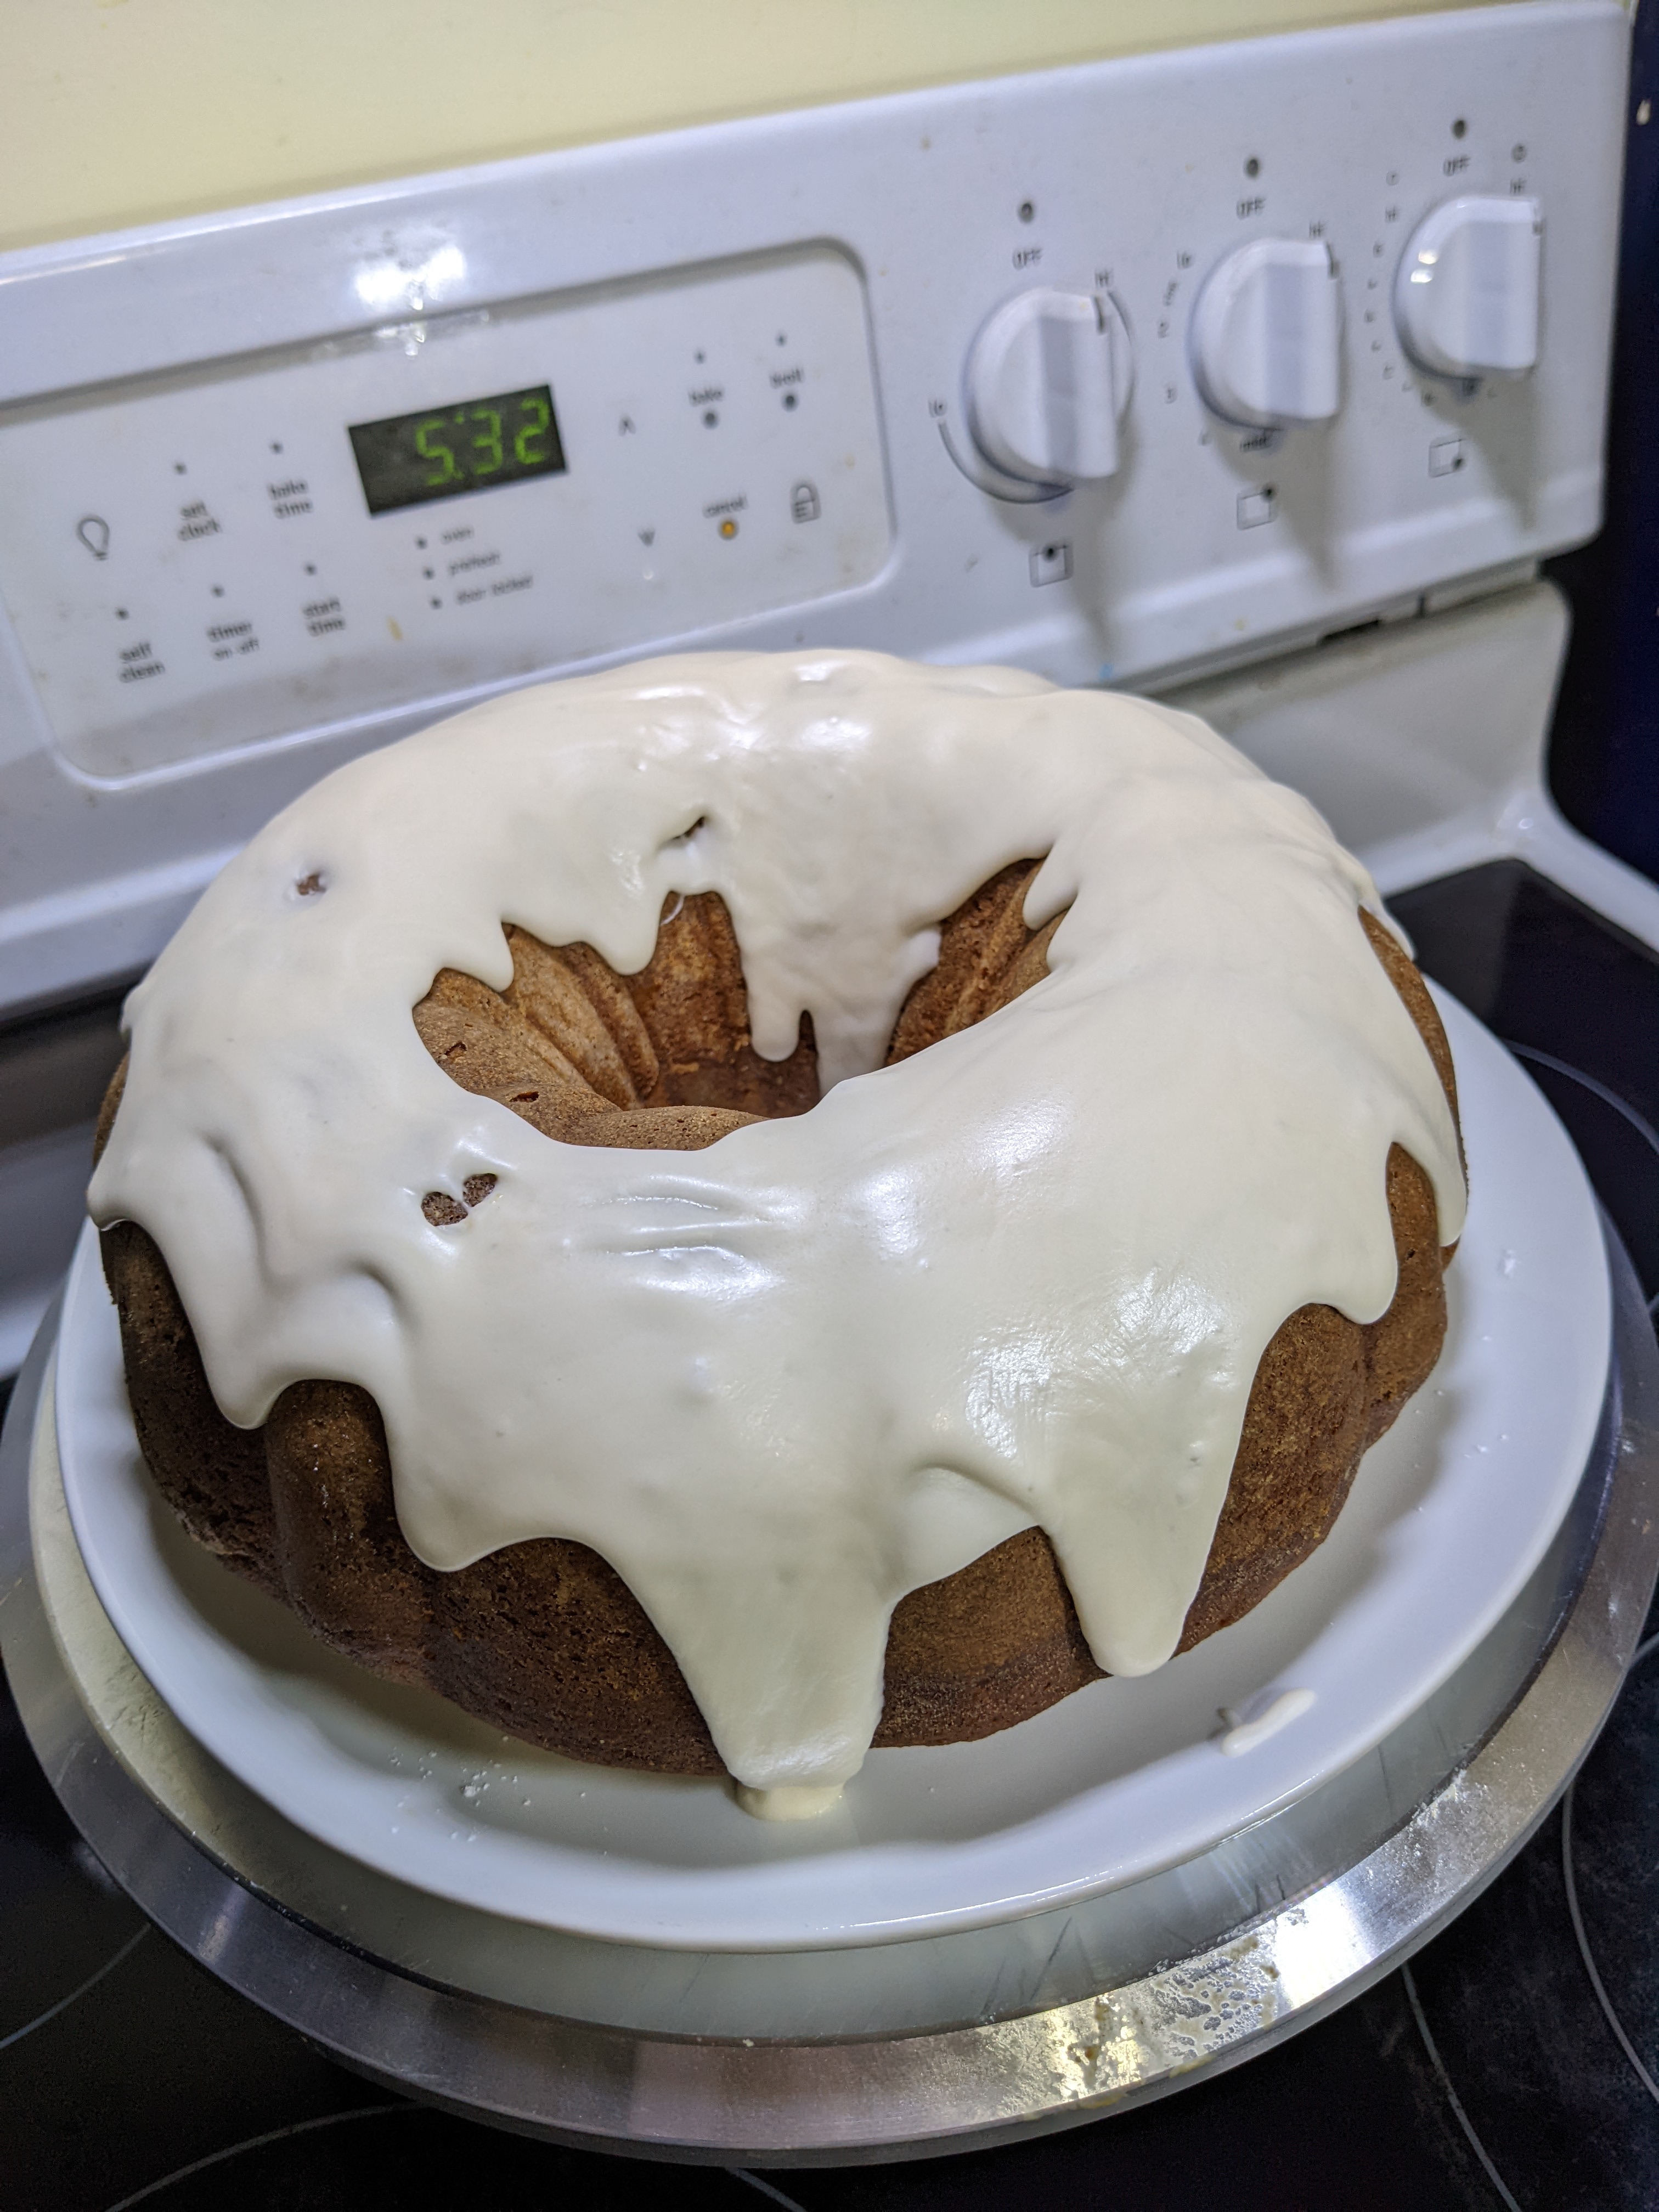 A bundt cake drizzled in a white glaze.